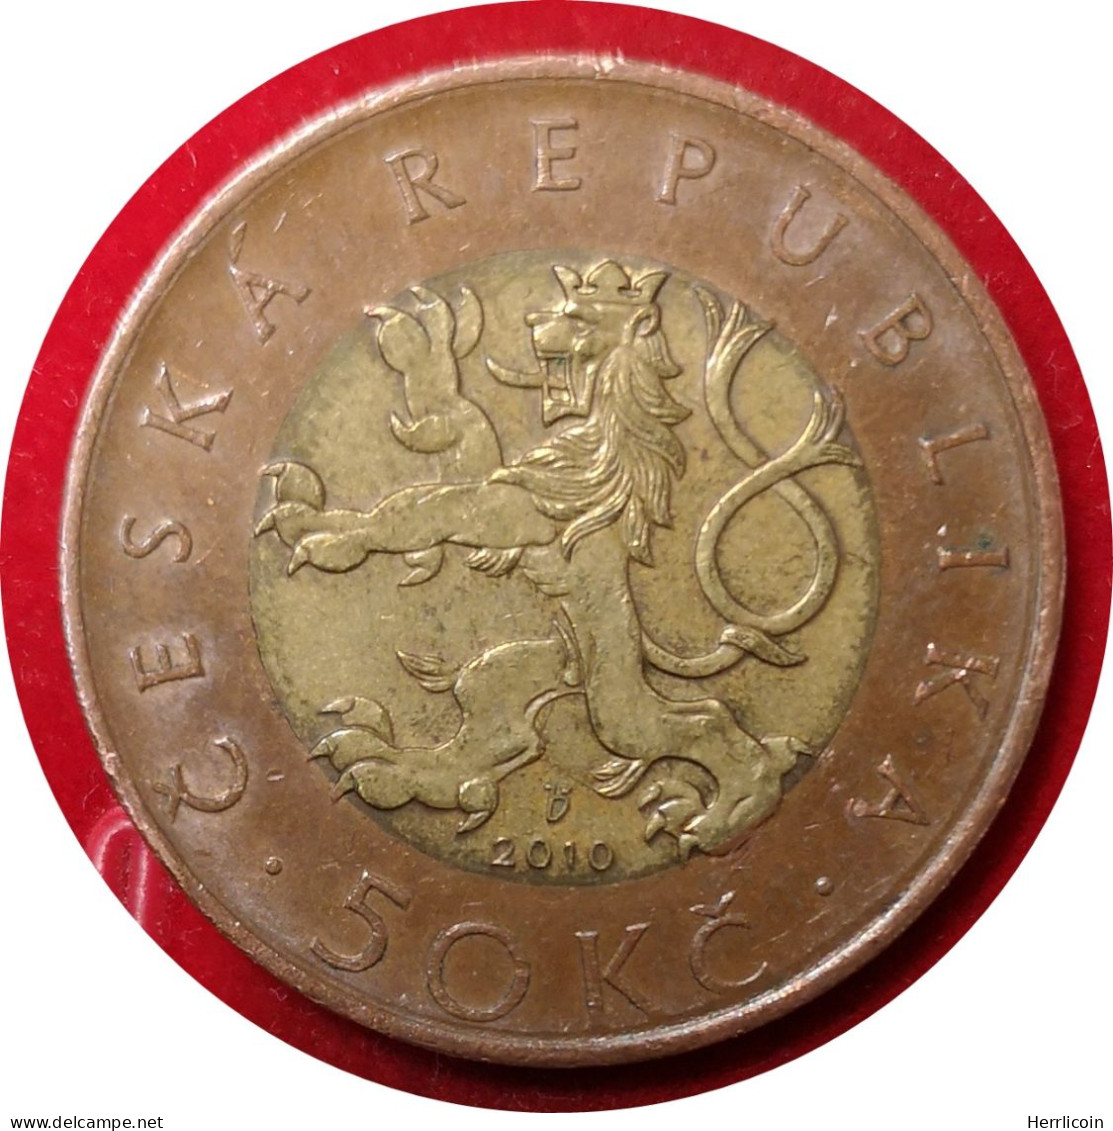 Monnaie  République Tchèque - 2010 - 50 Korun - Tschechische Rep.